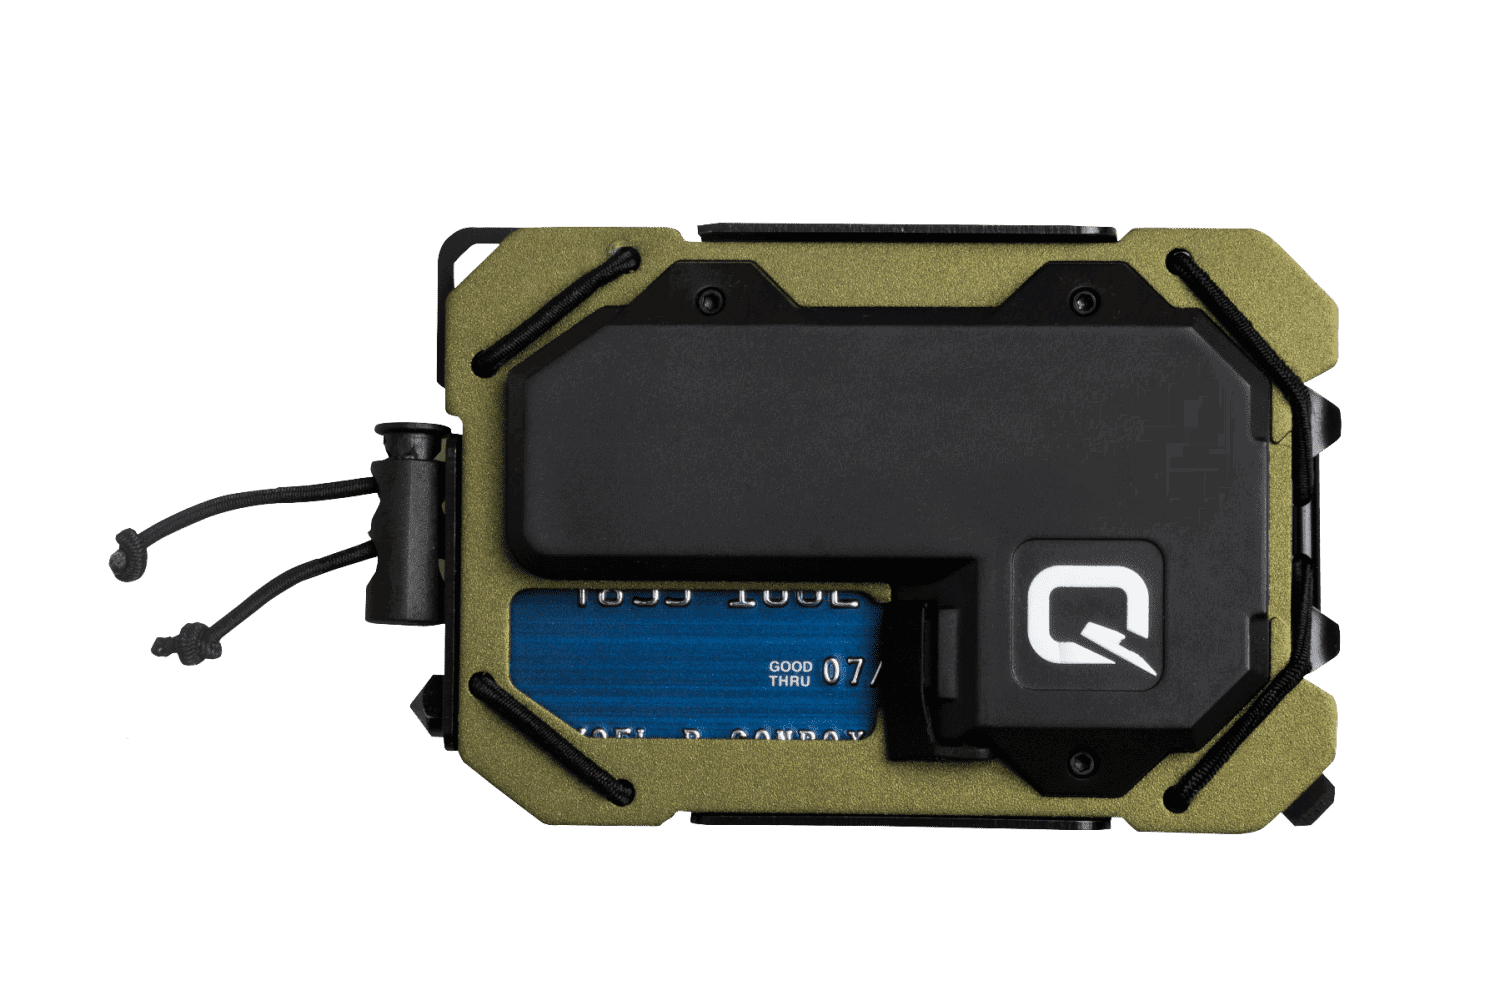 Quiqlite TAQ RFID Credit Card Wallet with Multi-tools and a Flashlight - Black